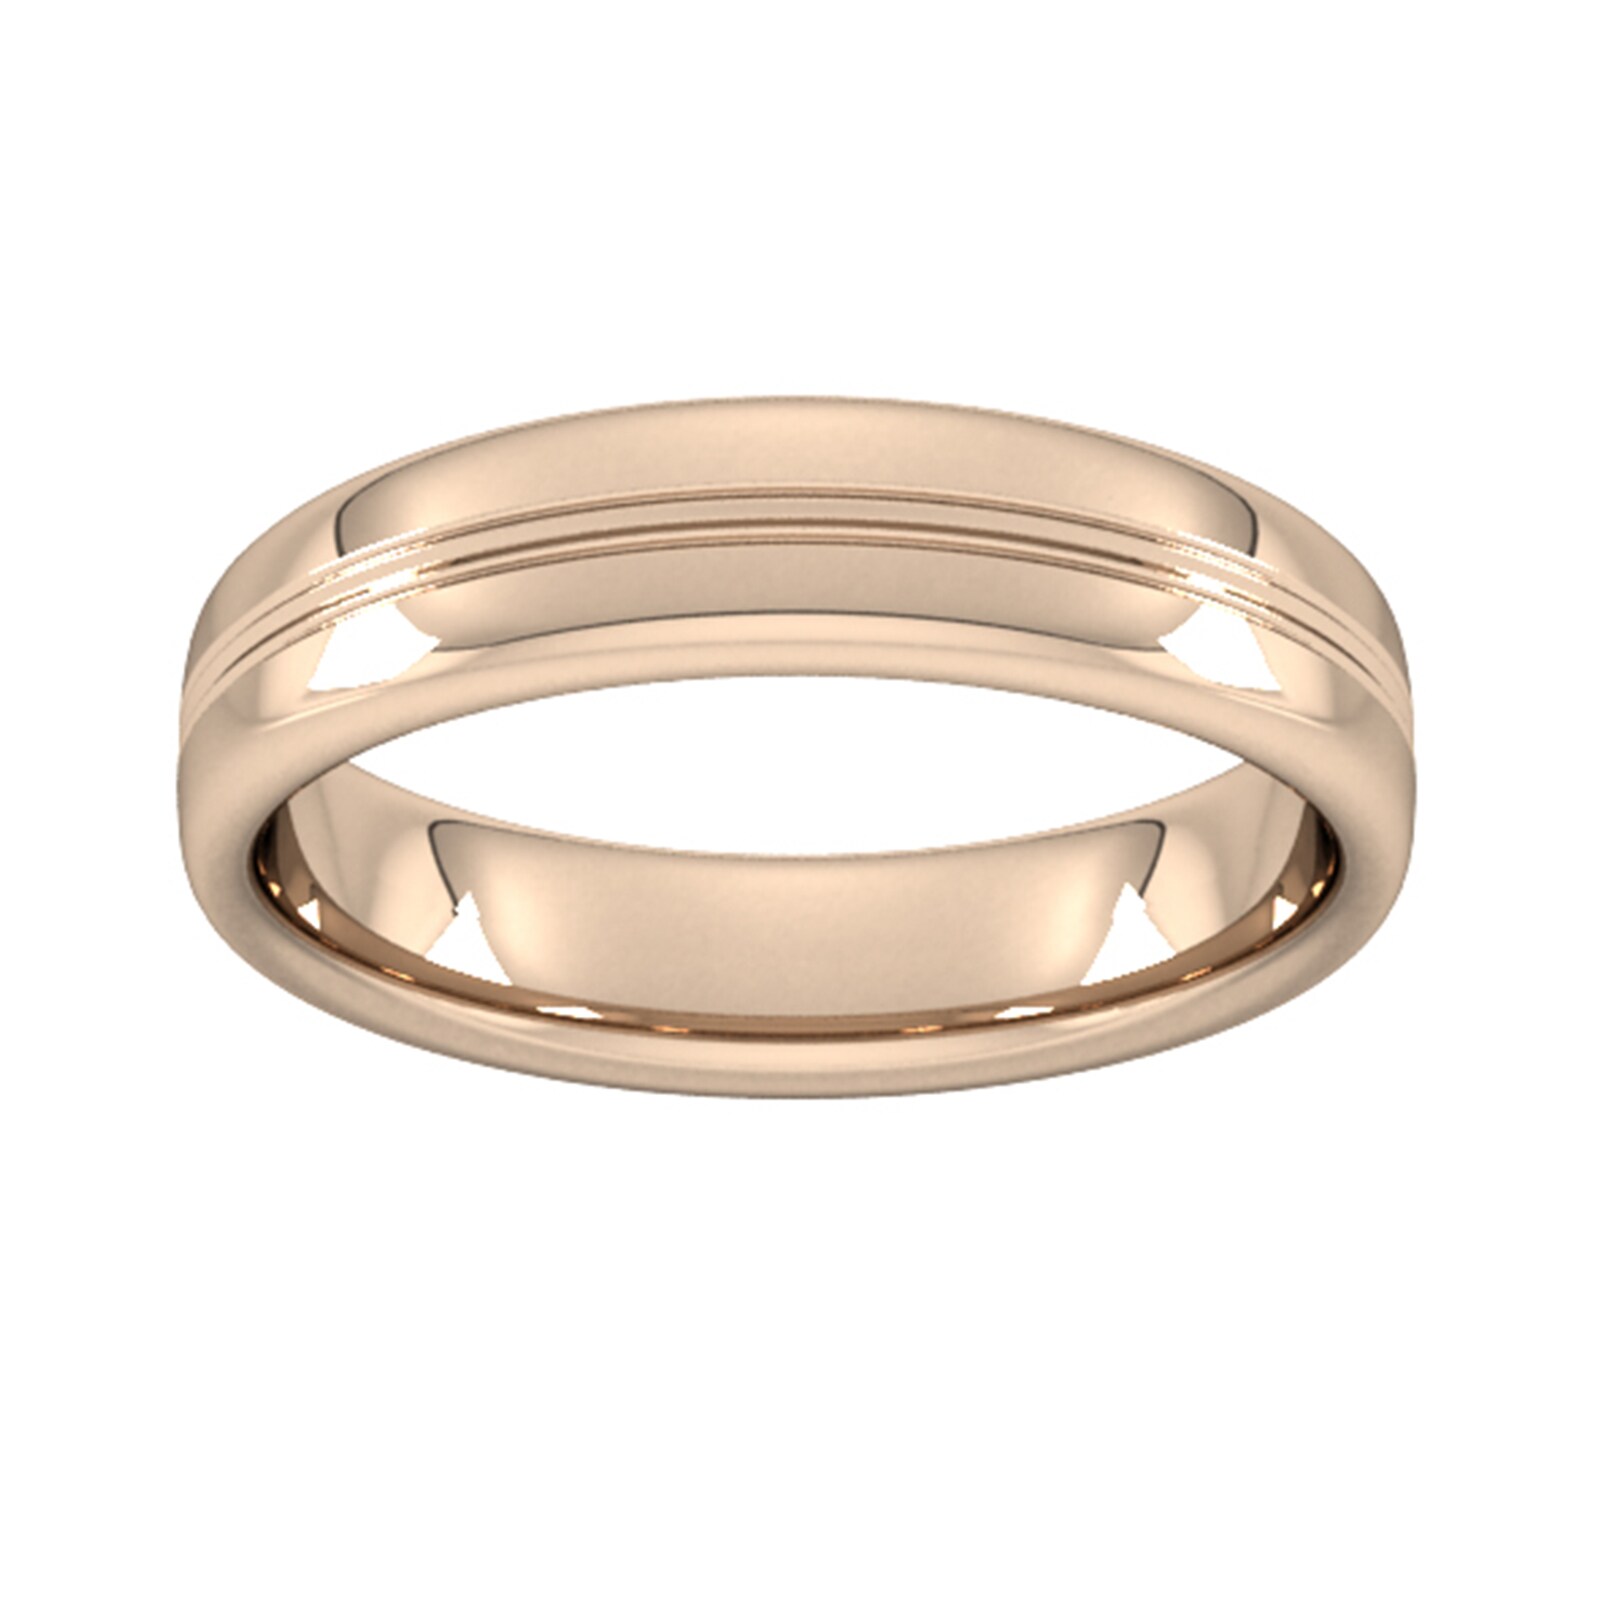 5mm Slight Court Standard Grooved Polished Finish Wedding Ring In 18 Carat Rose Gold - Ring Size I